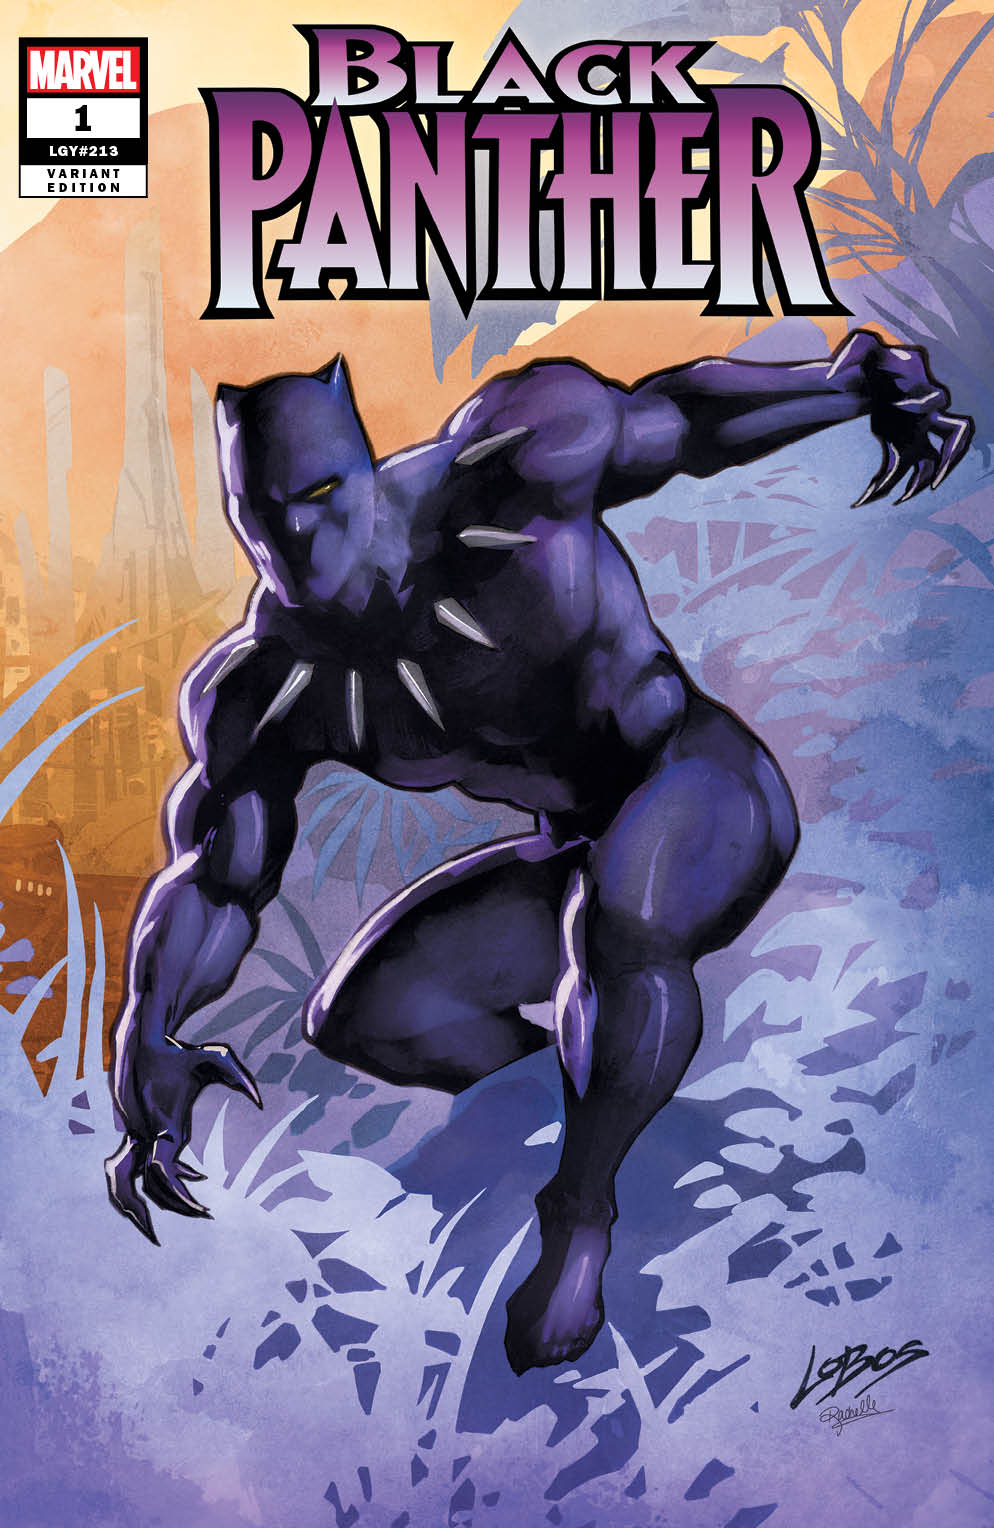 BLACK PANTHER #1 TRADE & VIRGIN SET COVER BY PABLO VILLALOBOS